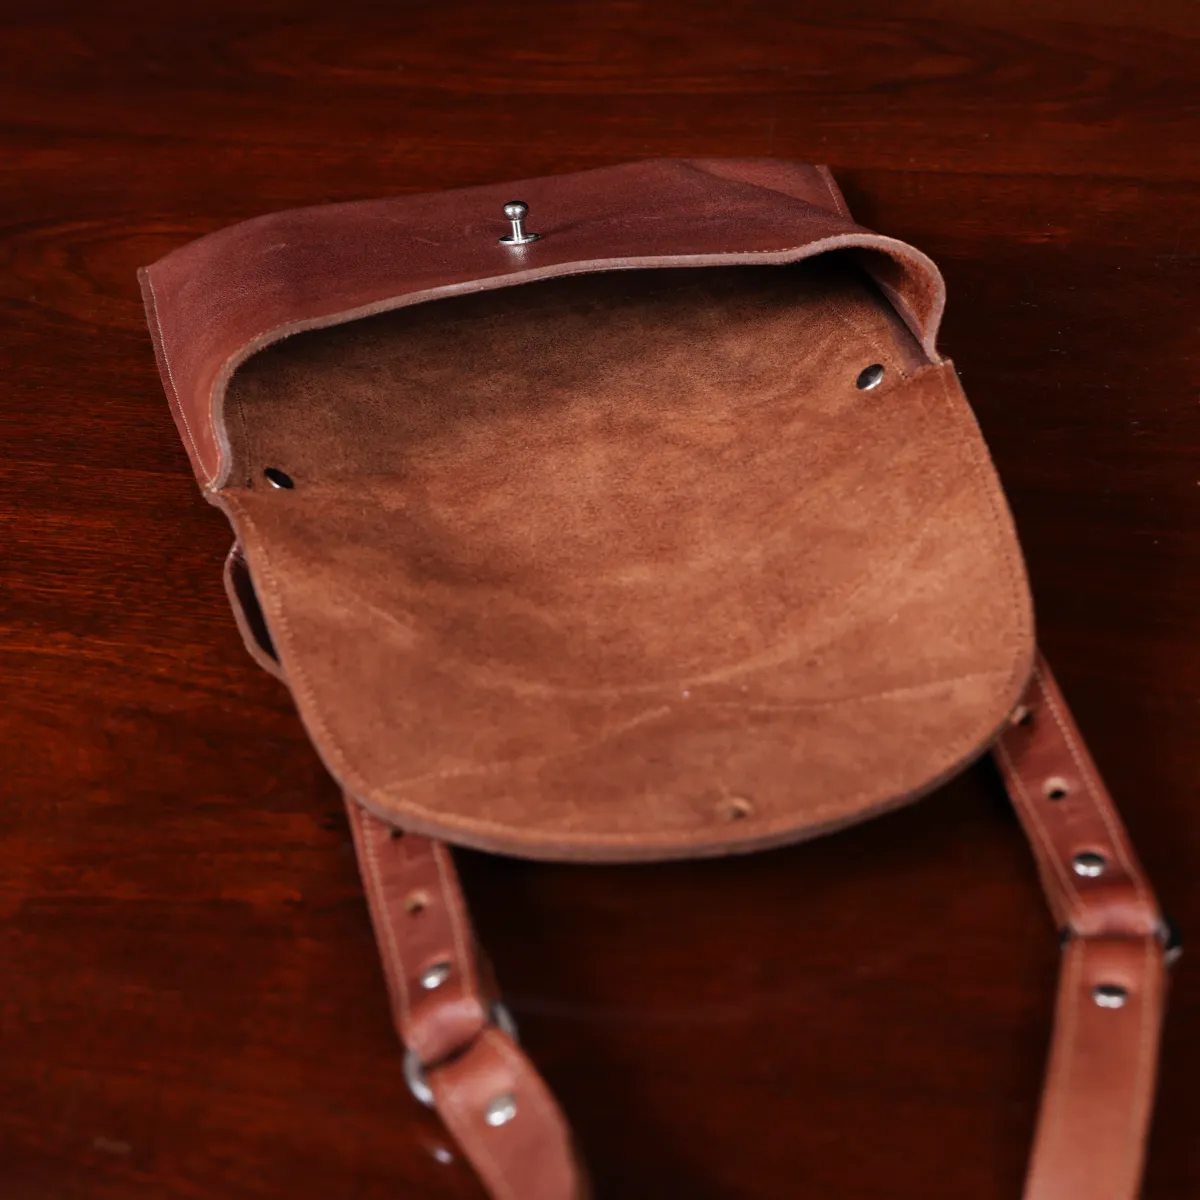 Saddle leather handbag